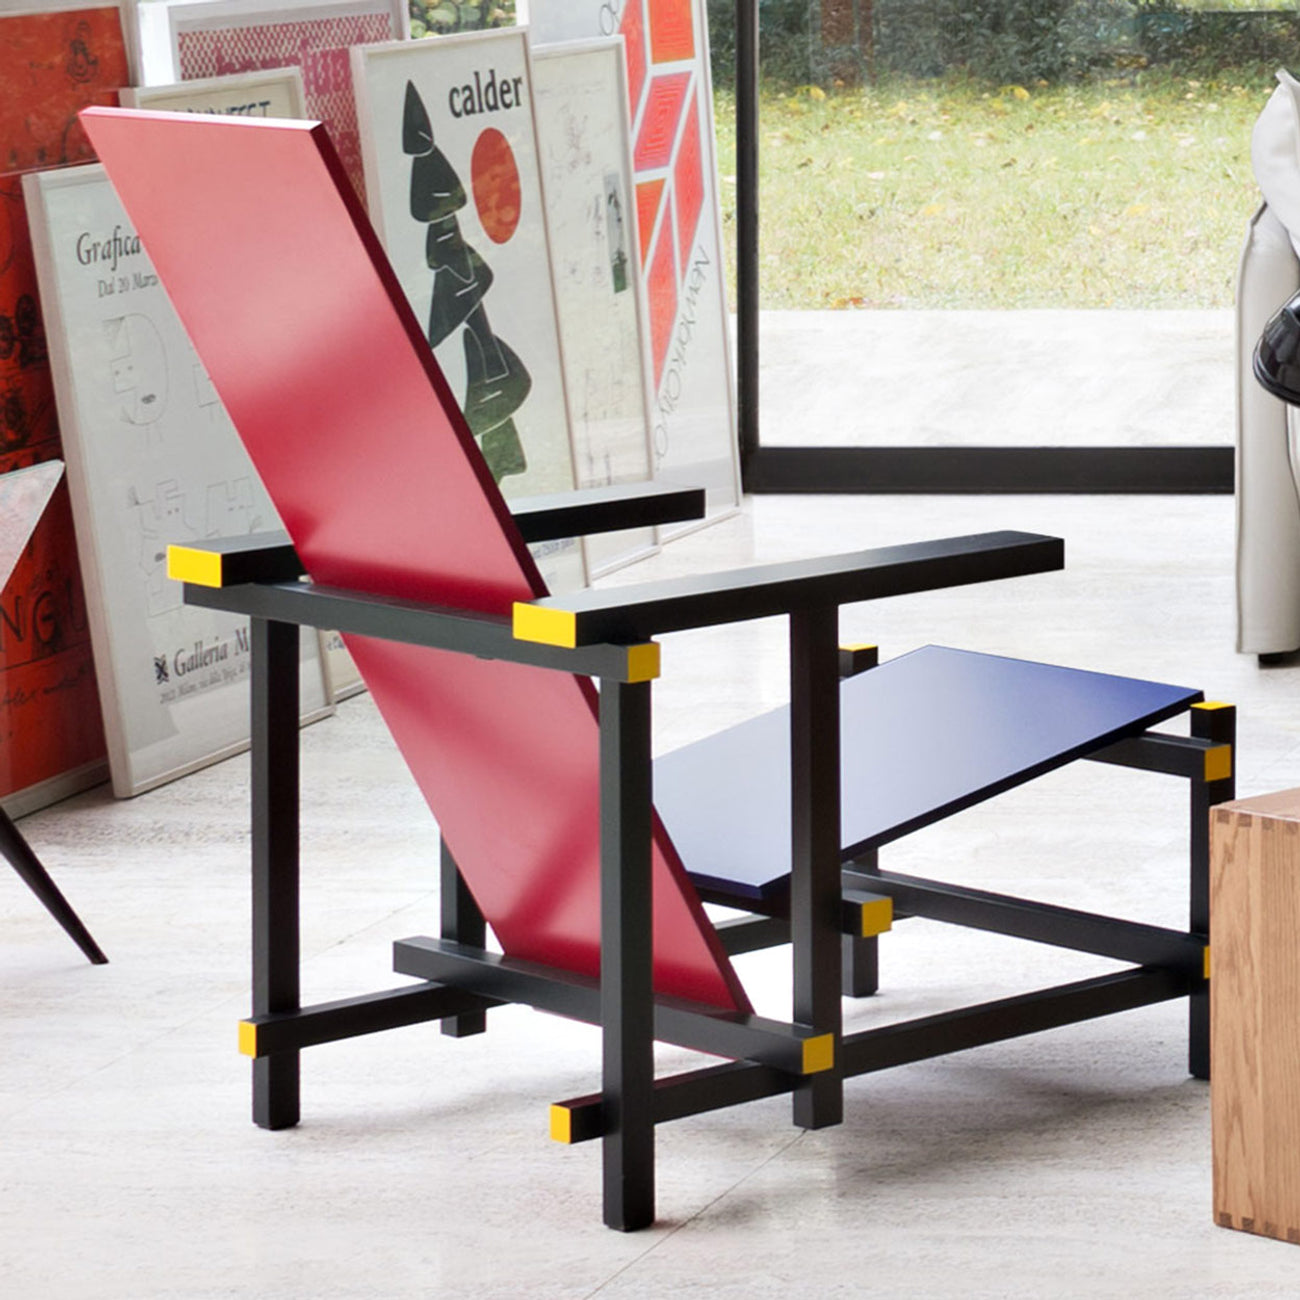 kofferbak Mellow Verdorie Buy a Red and Blue Chair (Cassina)? | Rietveld Originals